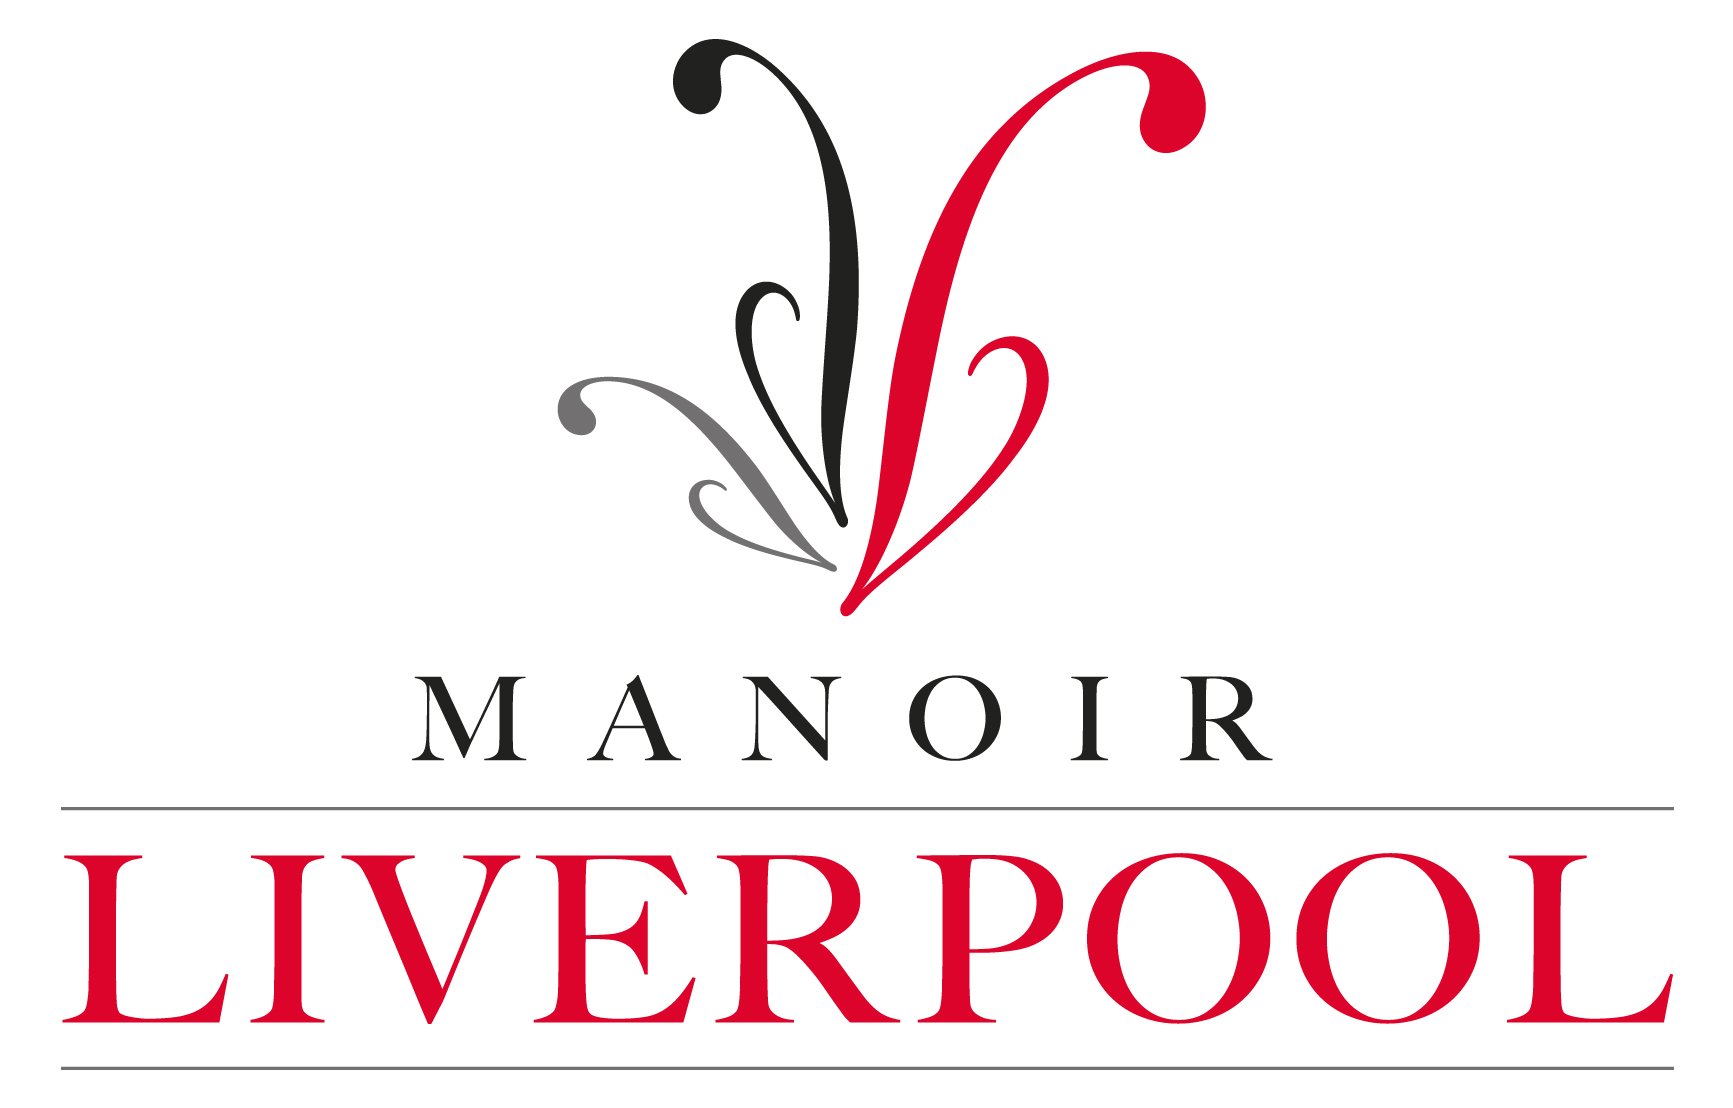 Manoir New Liverpool